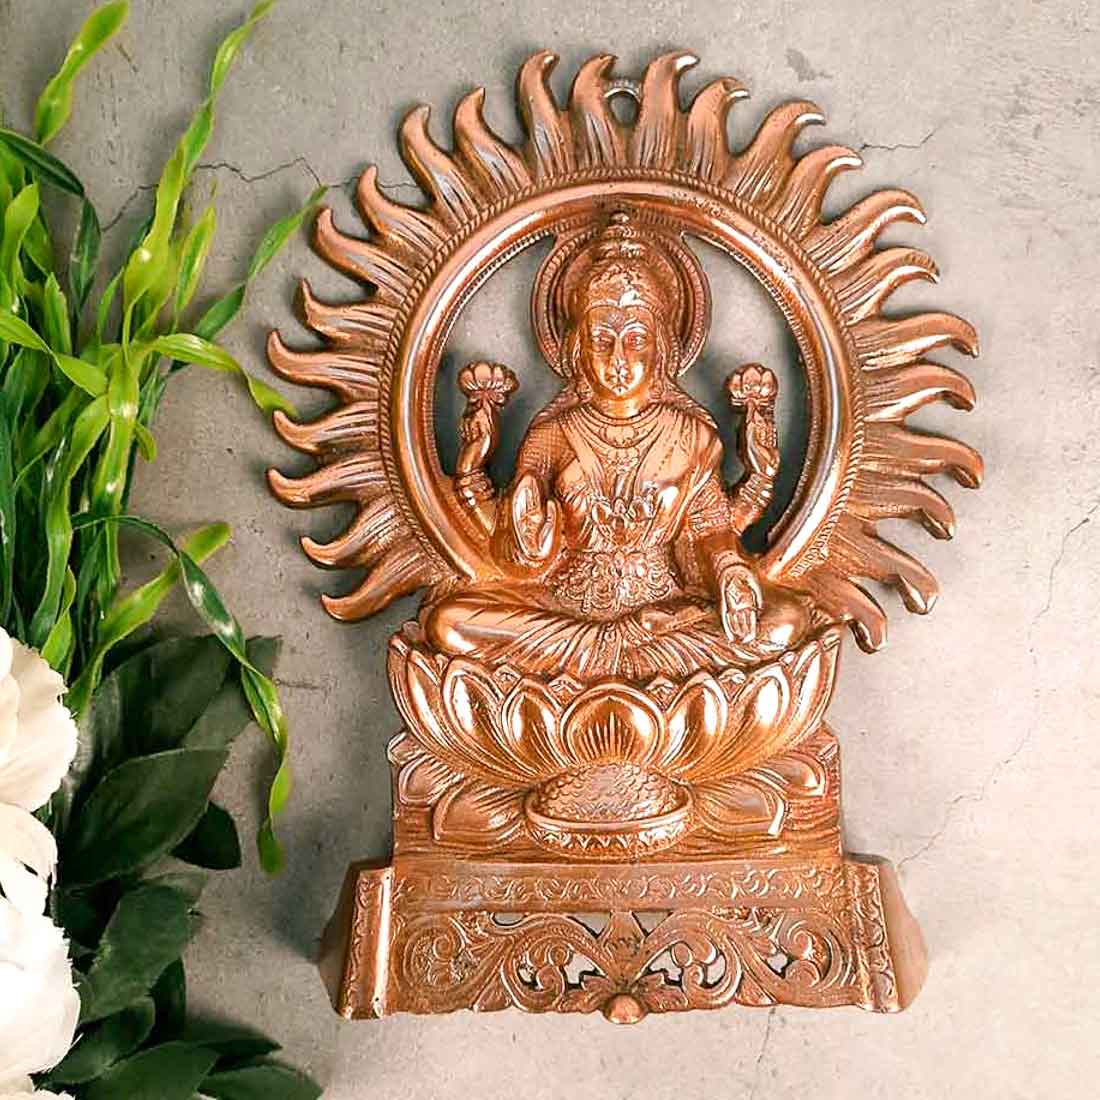 Lakshmi Idol Wall Hanging | Goddess Laxmi Sitting On Lotus / Kamal Wall Statue Decor |Religoius & Spiritual Wall Art - For Diwali, Puja, Home & Entrance  Living Room & Gift  - 11  Inch